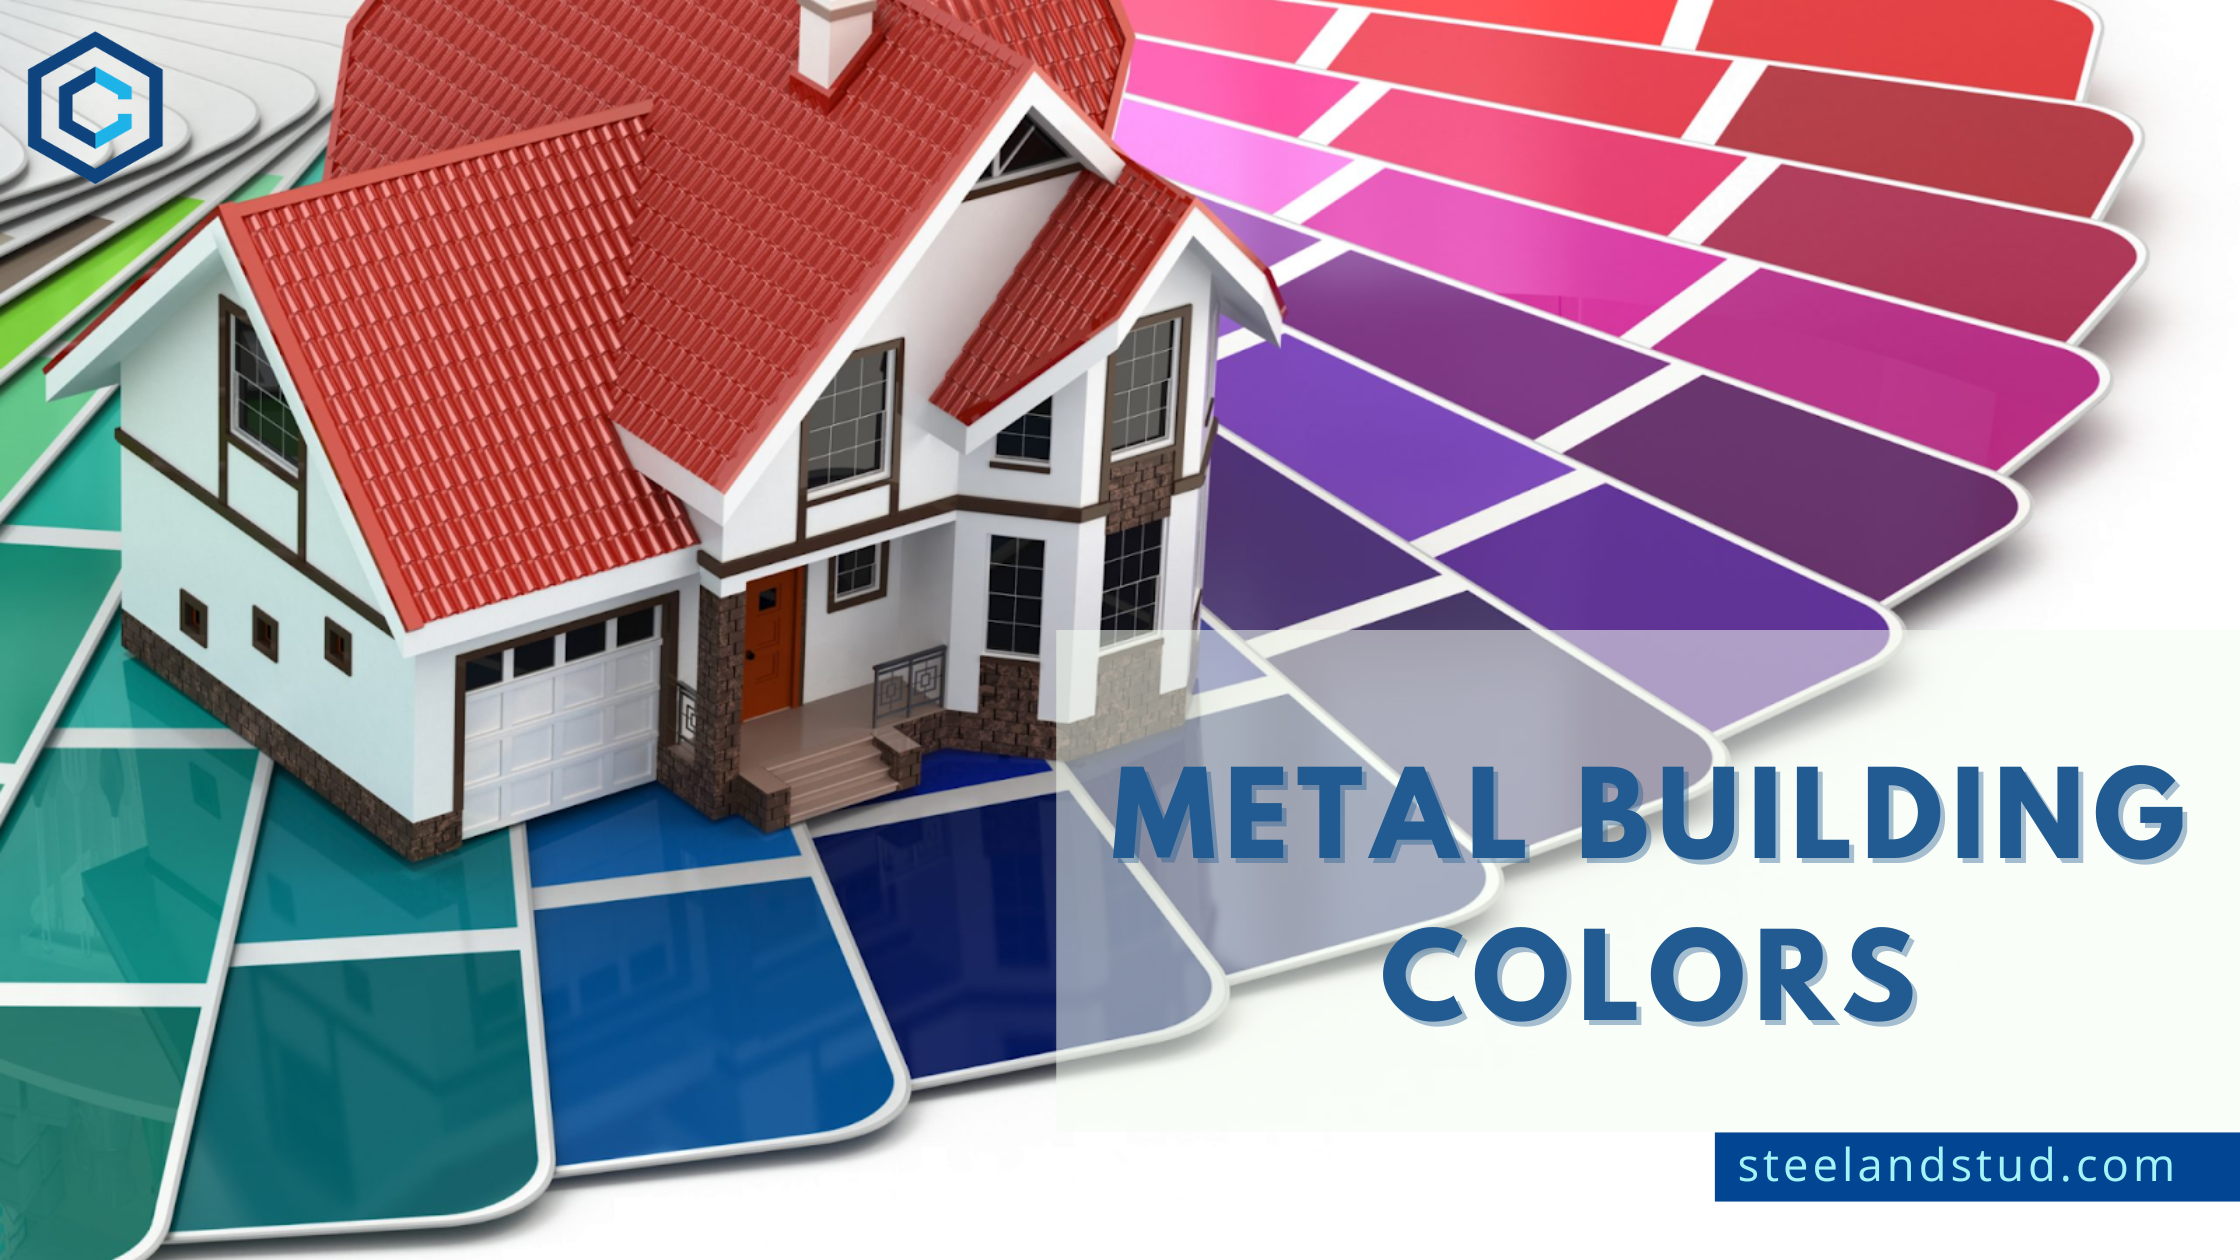 Metal building colors